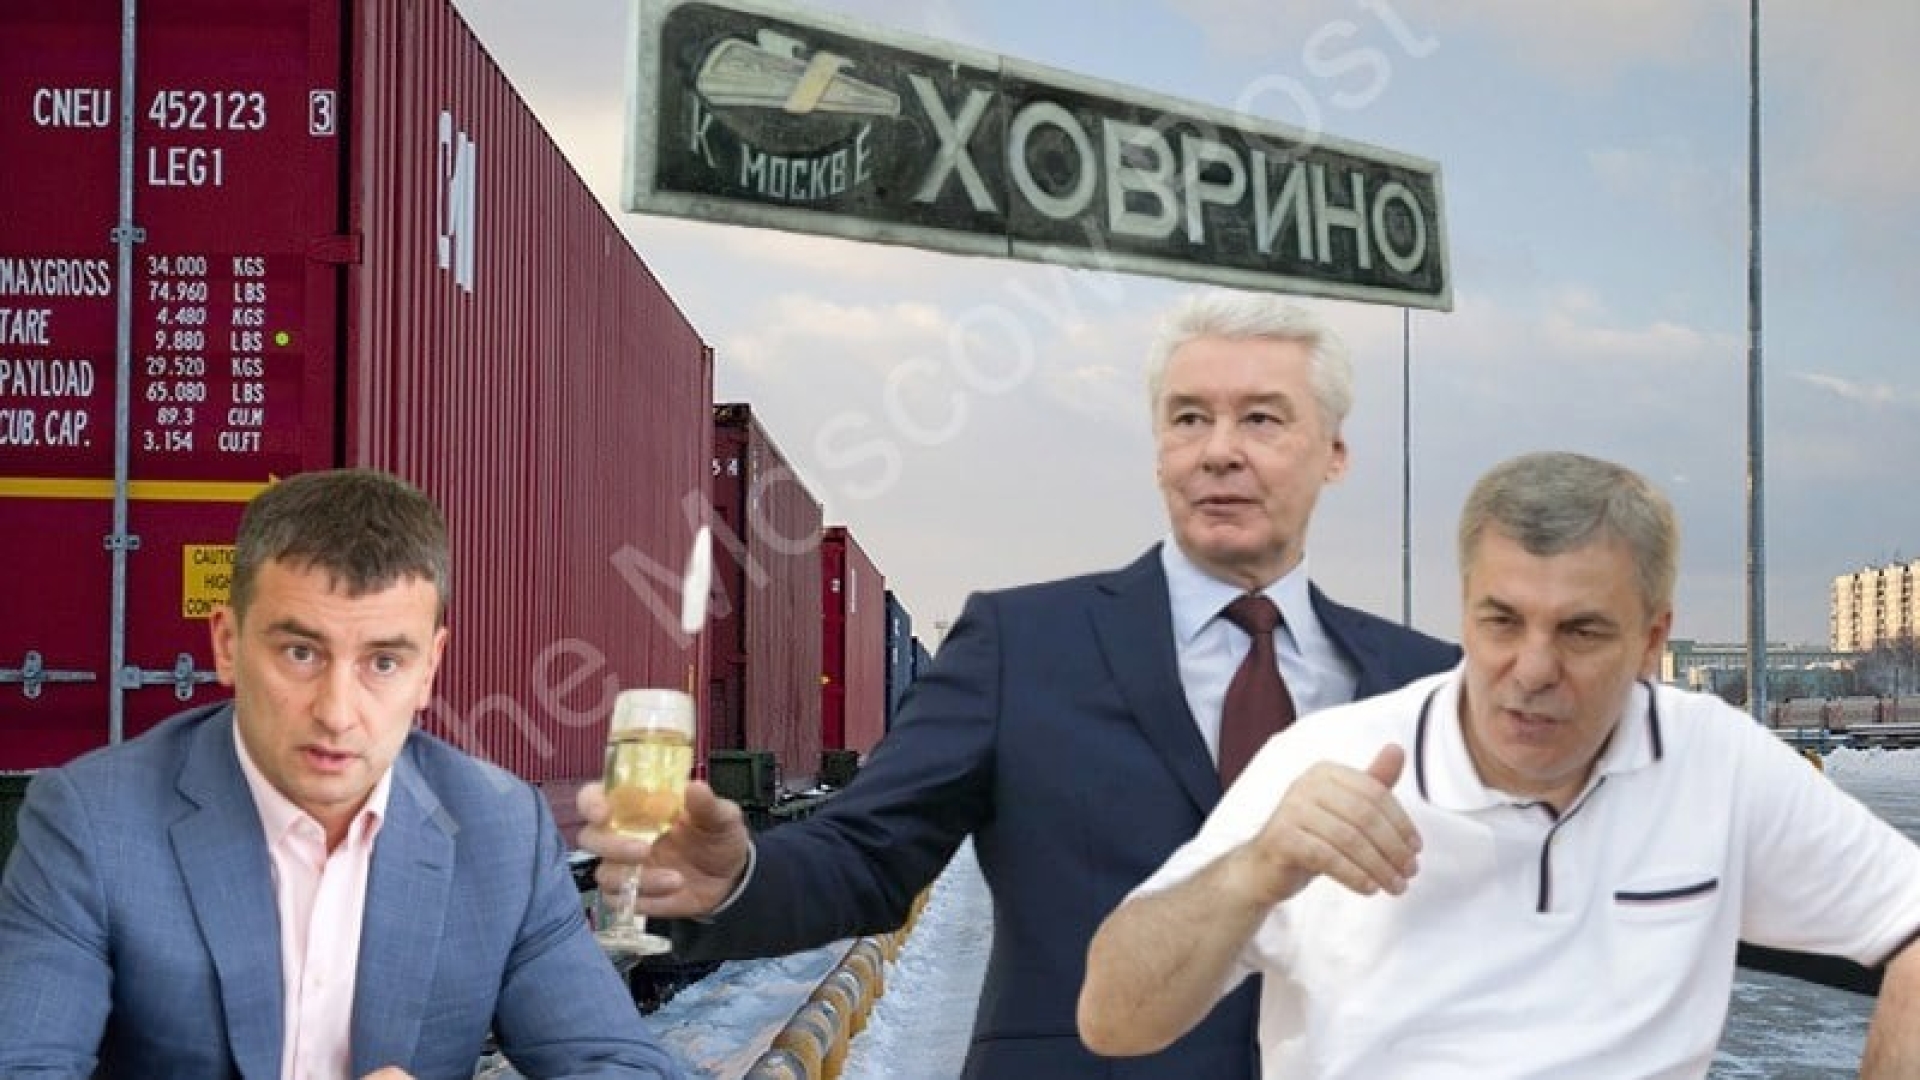 Everything in Khovrino: Sergei Sobyanin "launched" Arsen Kanokov to the terminal